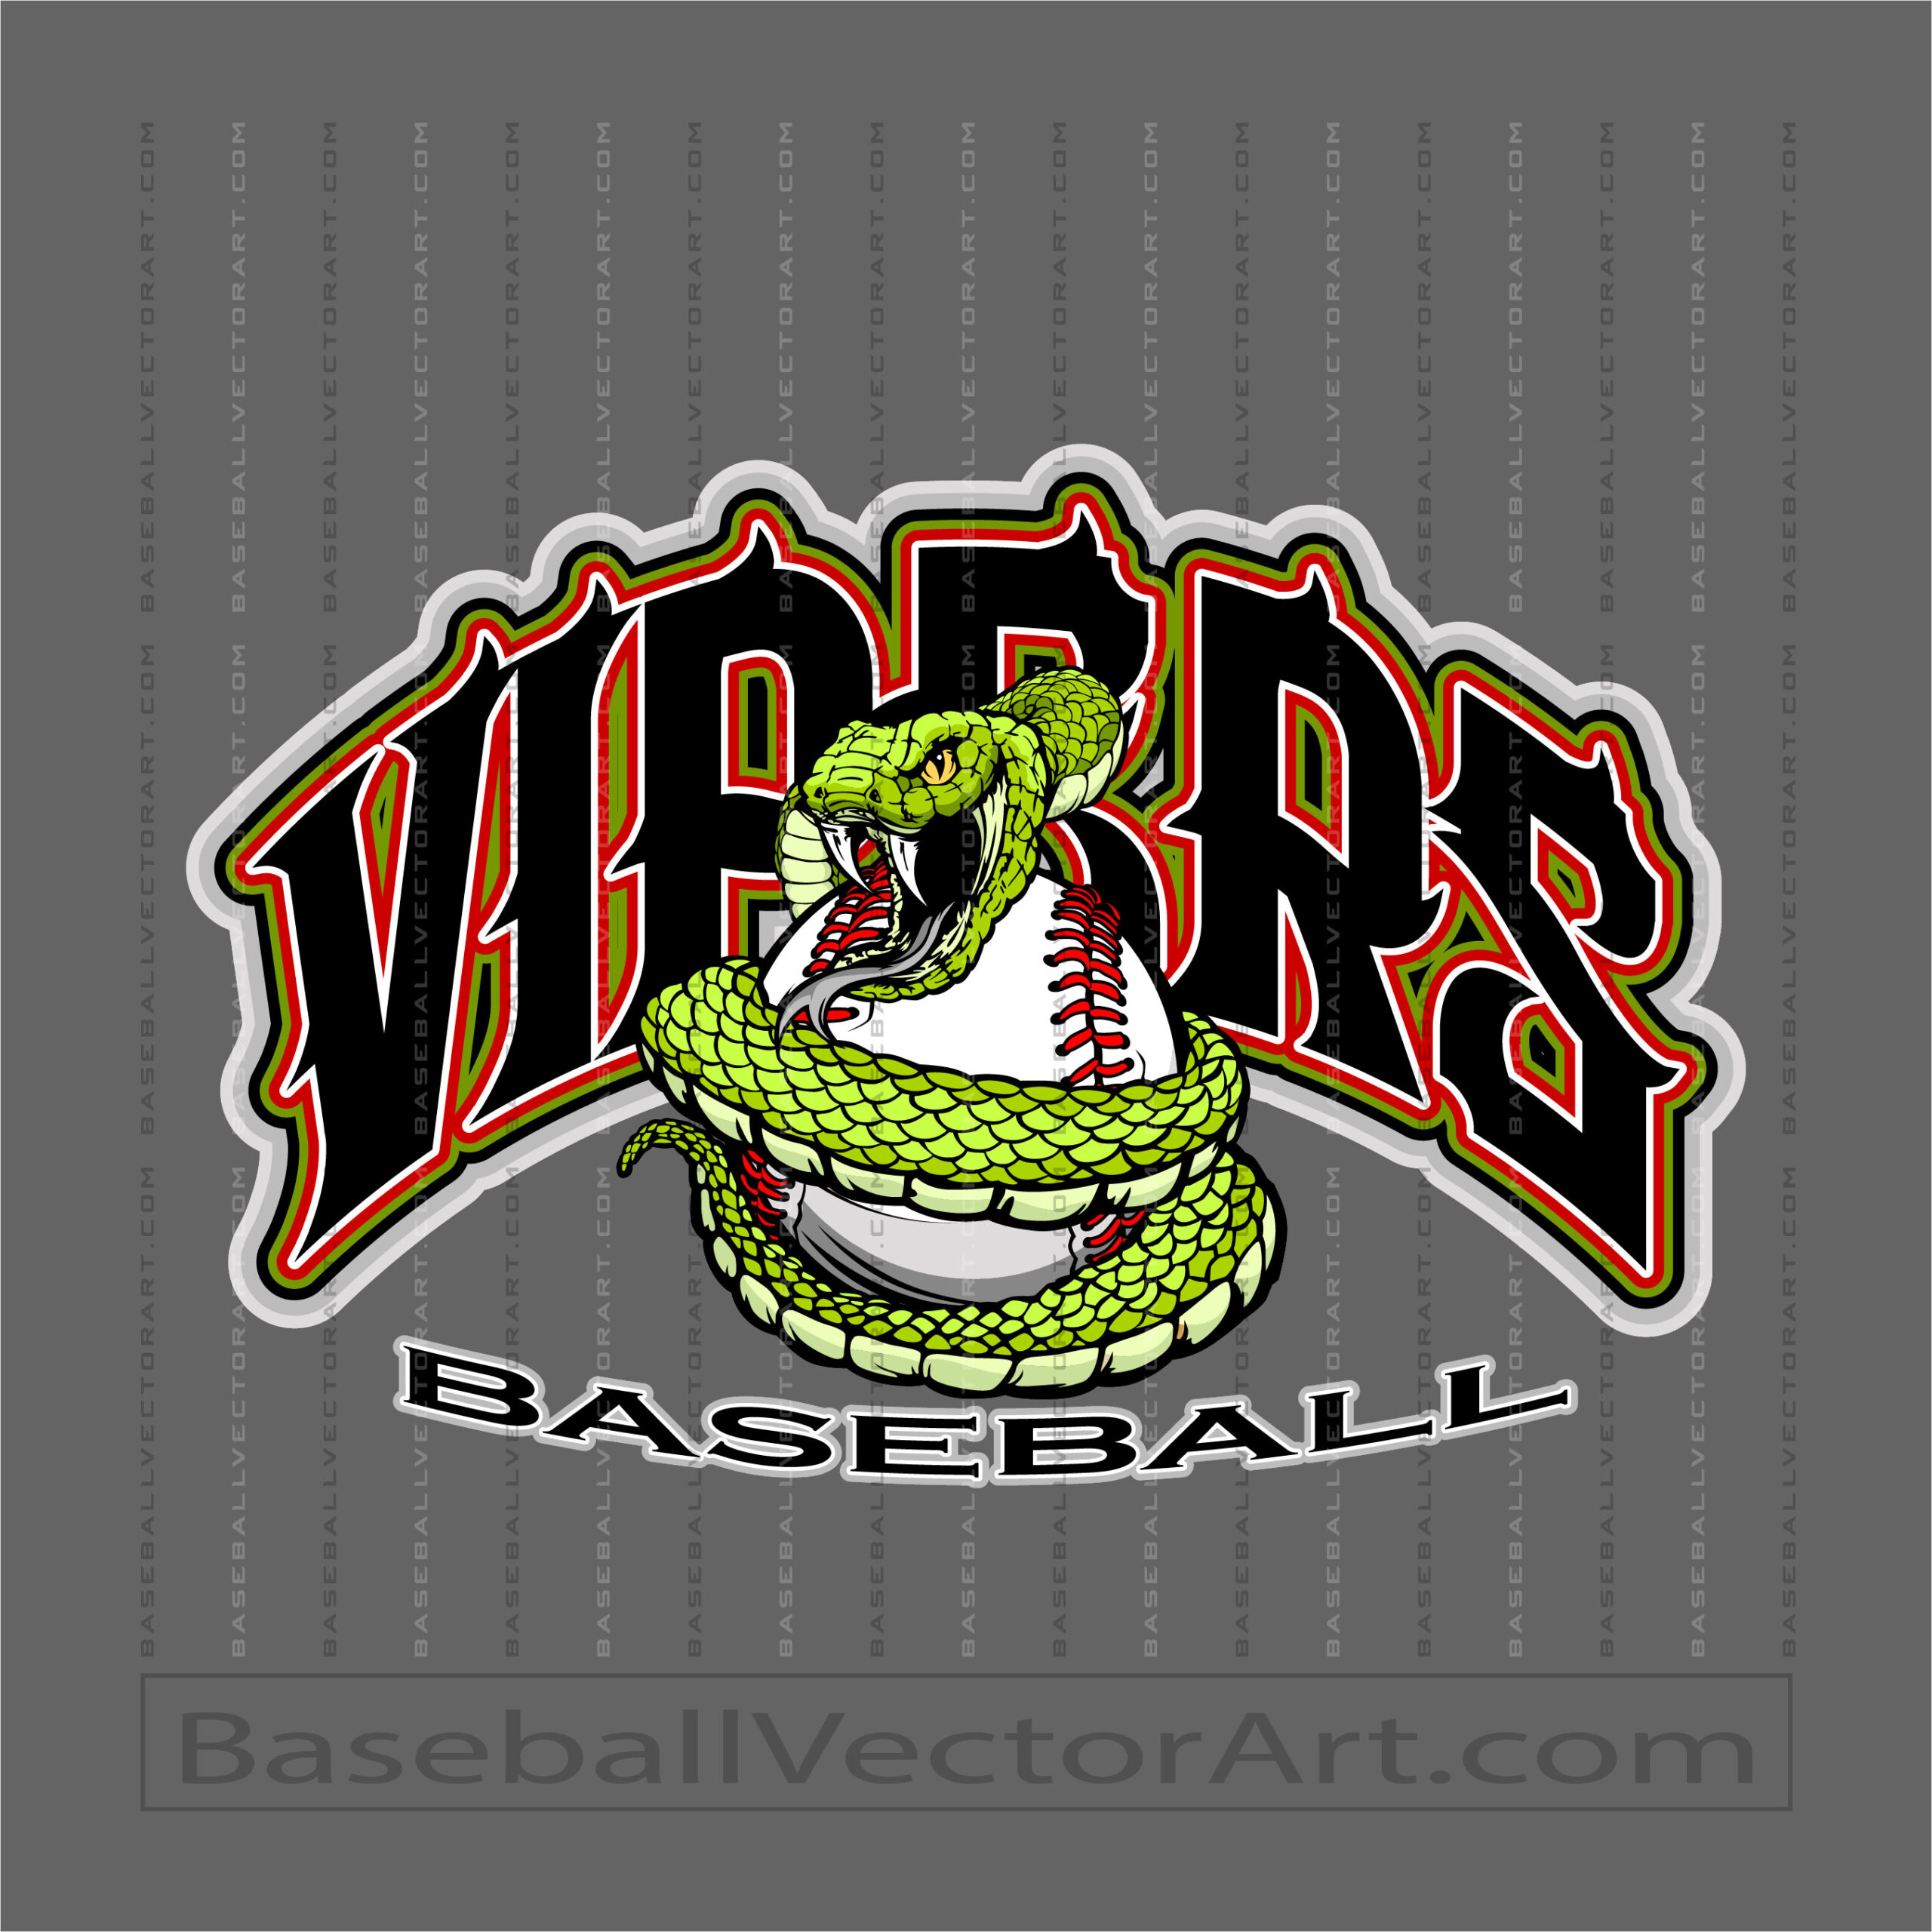 Vipers Baseball Pin Art